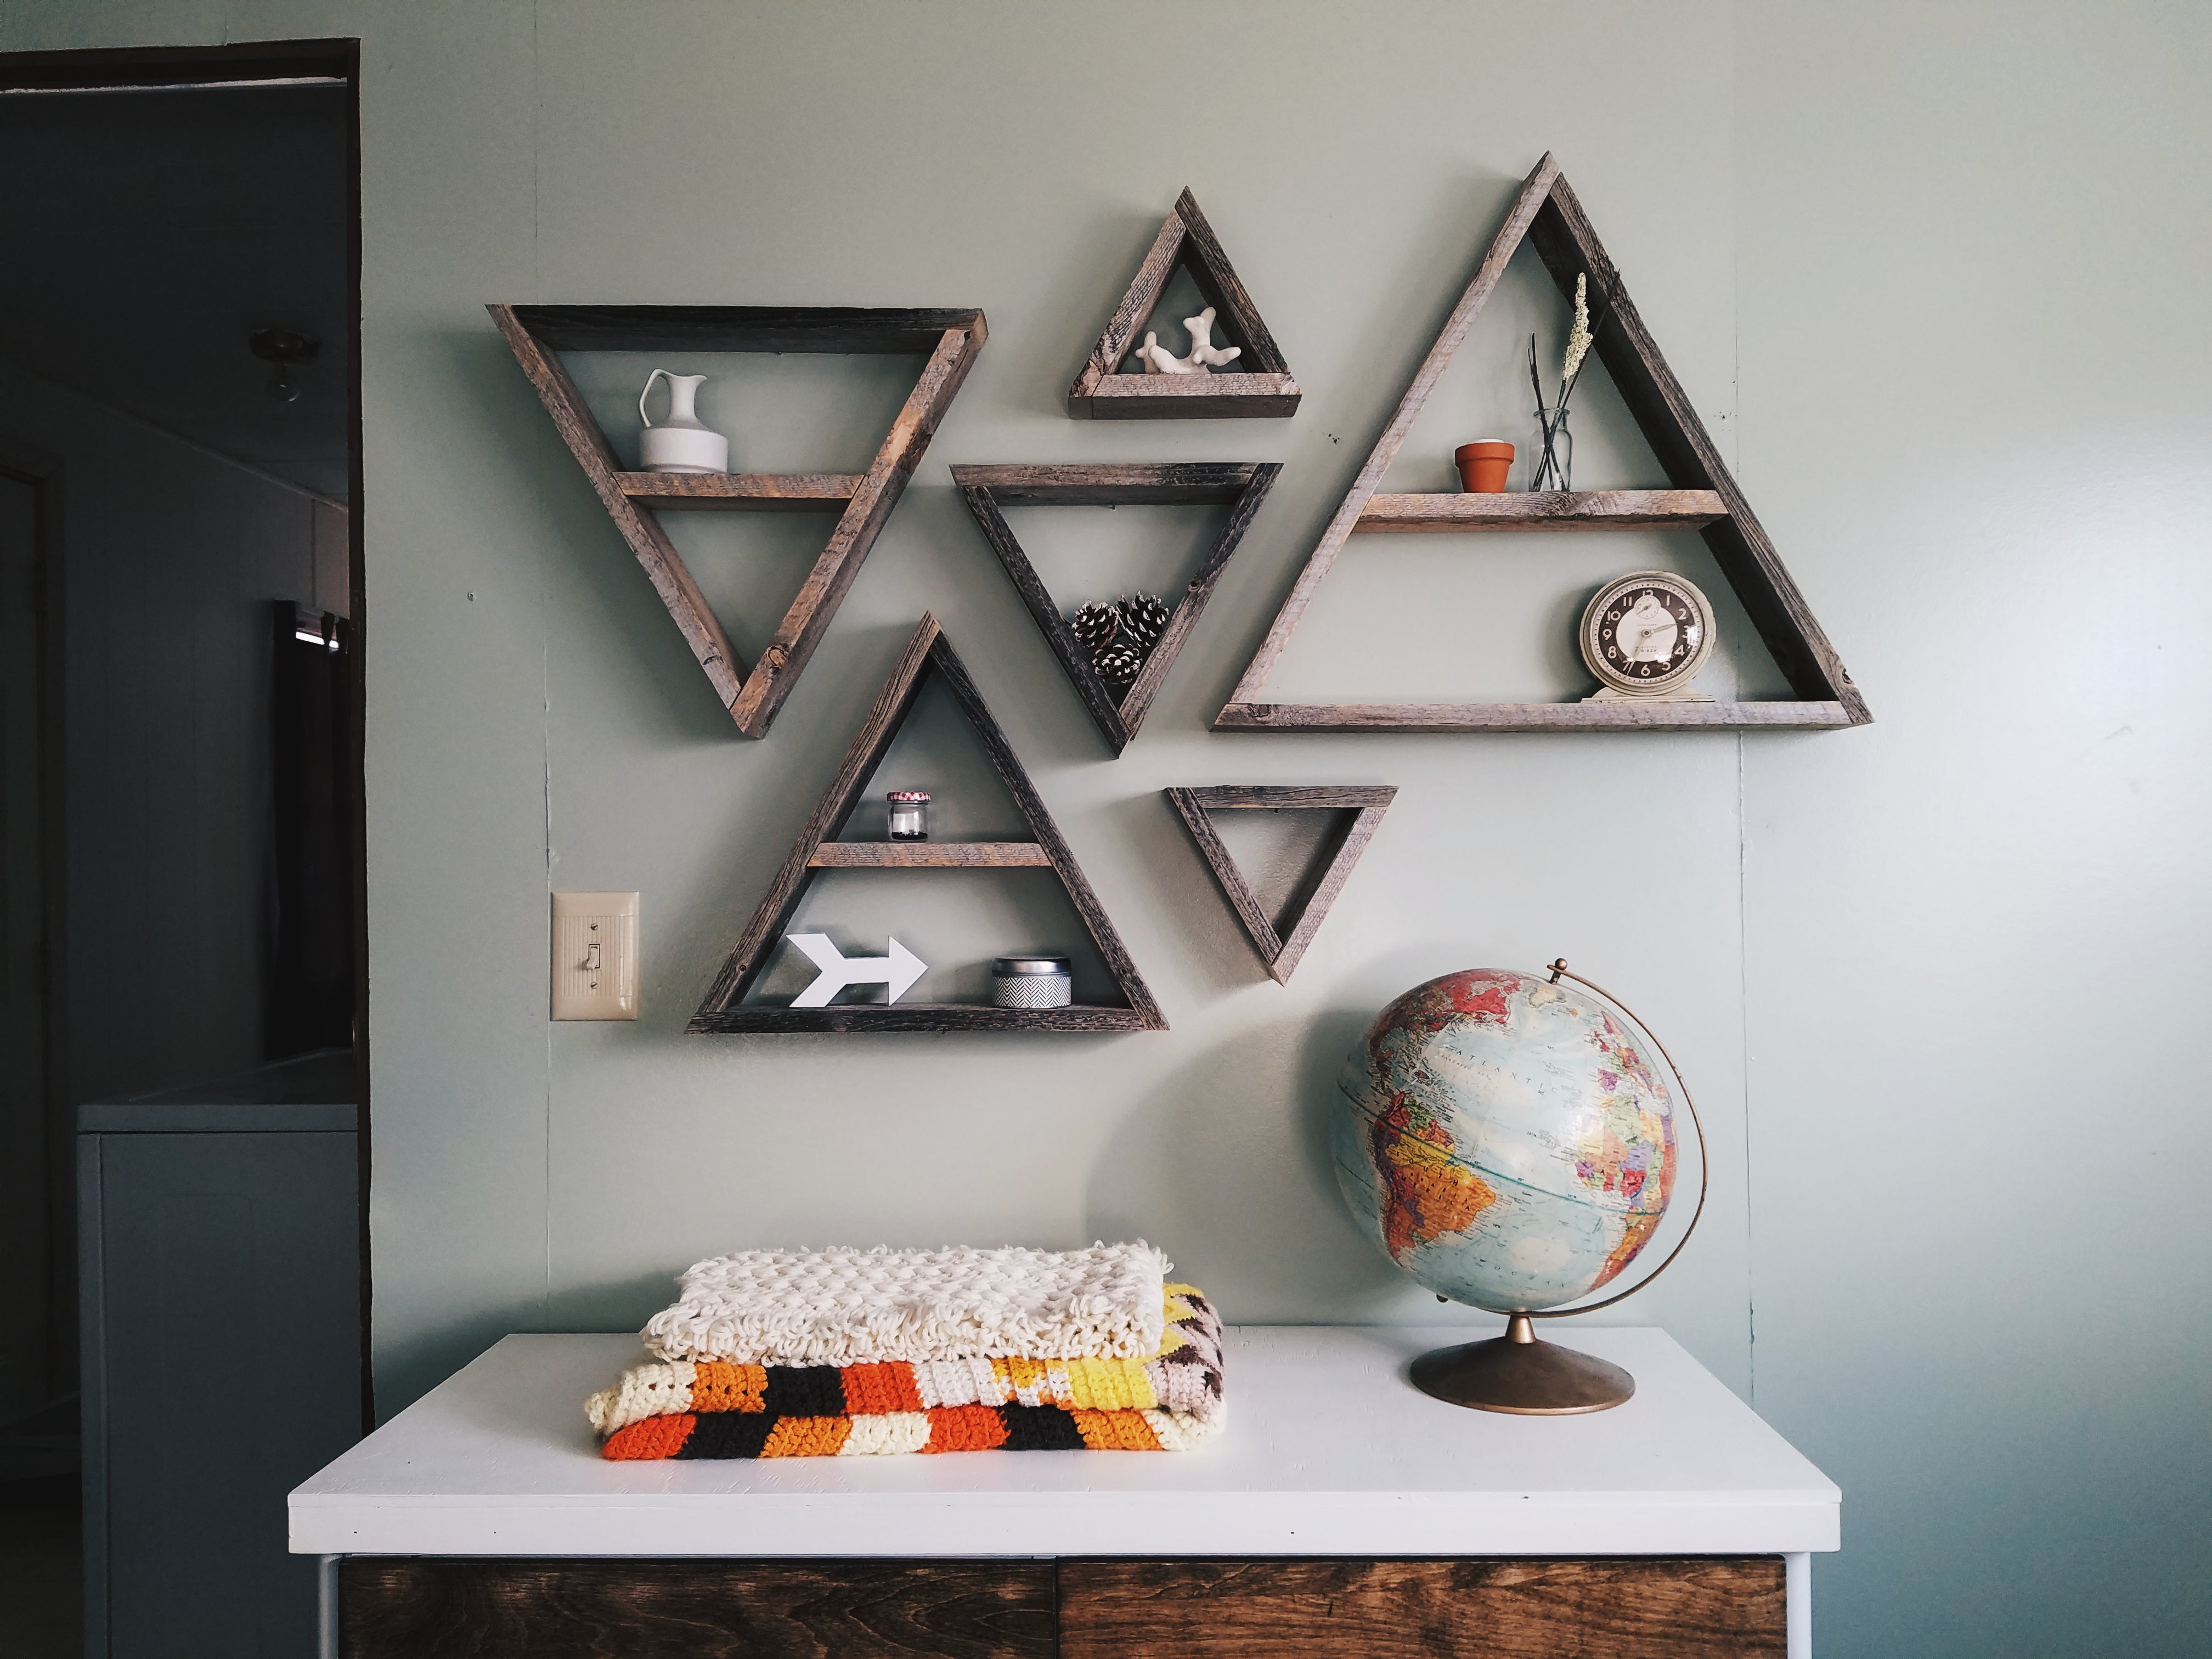 Set of 6 Triangle Shelves